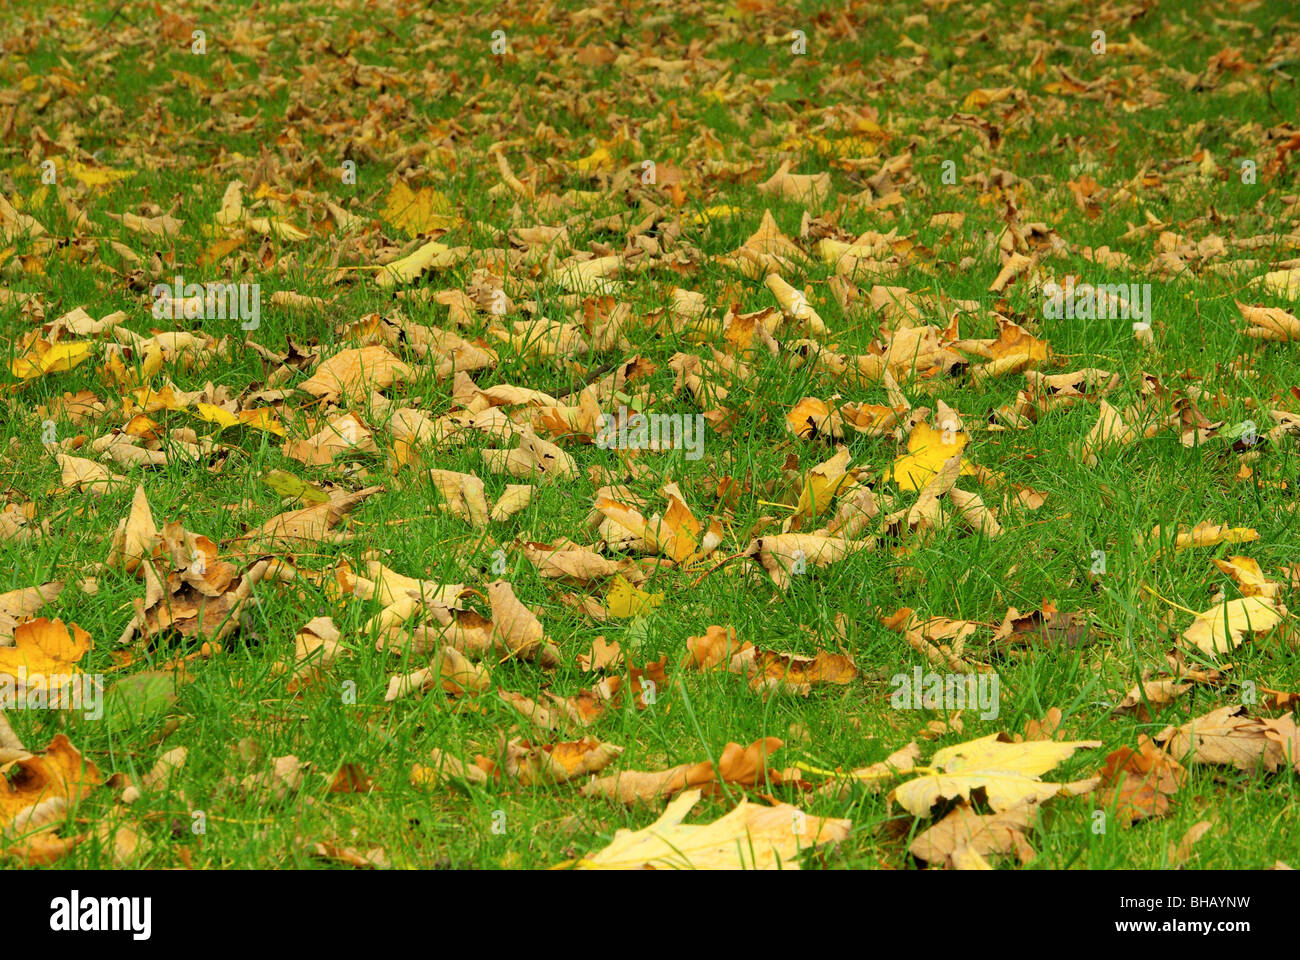 Herbstlaub auf Wiese - fall foliage on meadow 02 Stock Photo